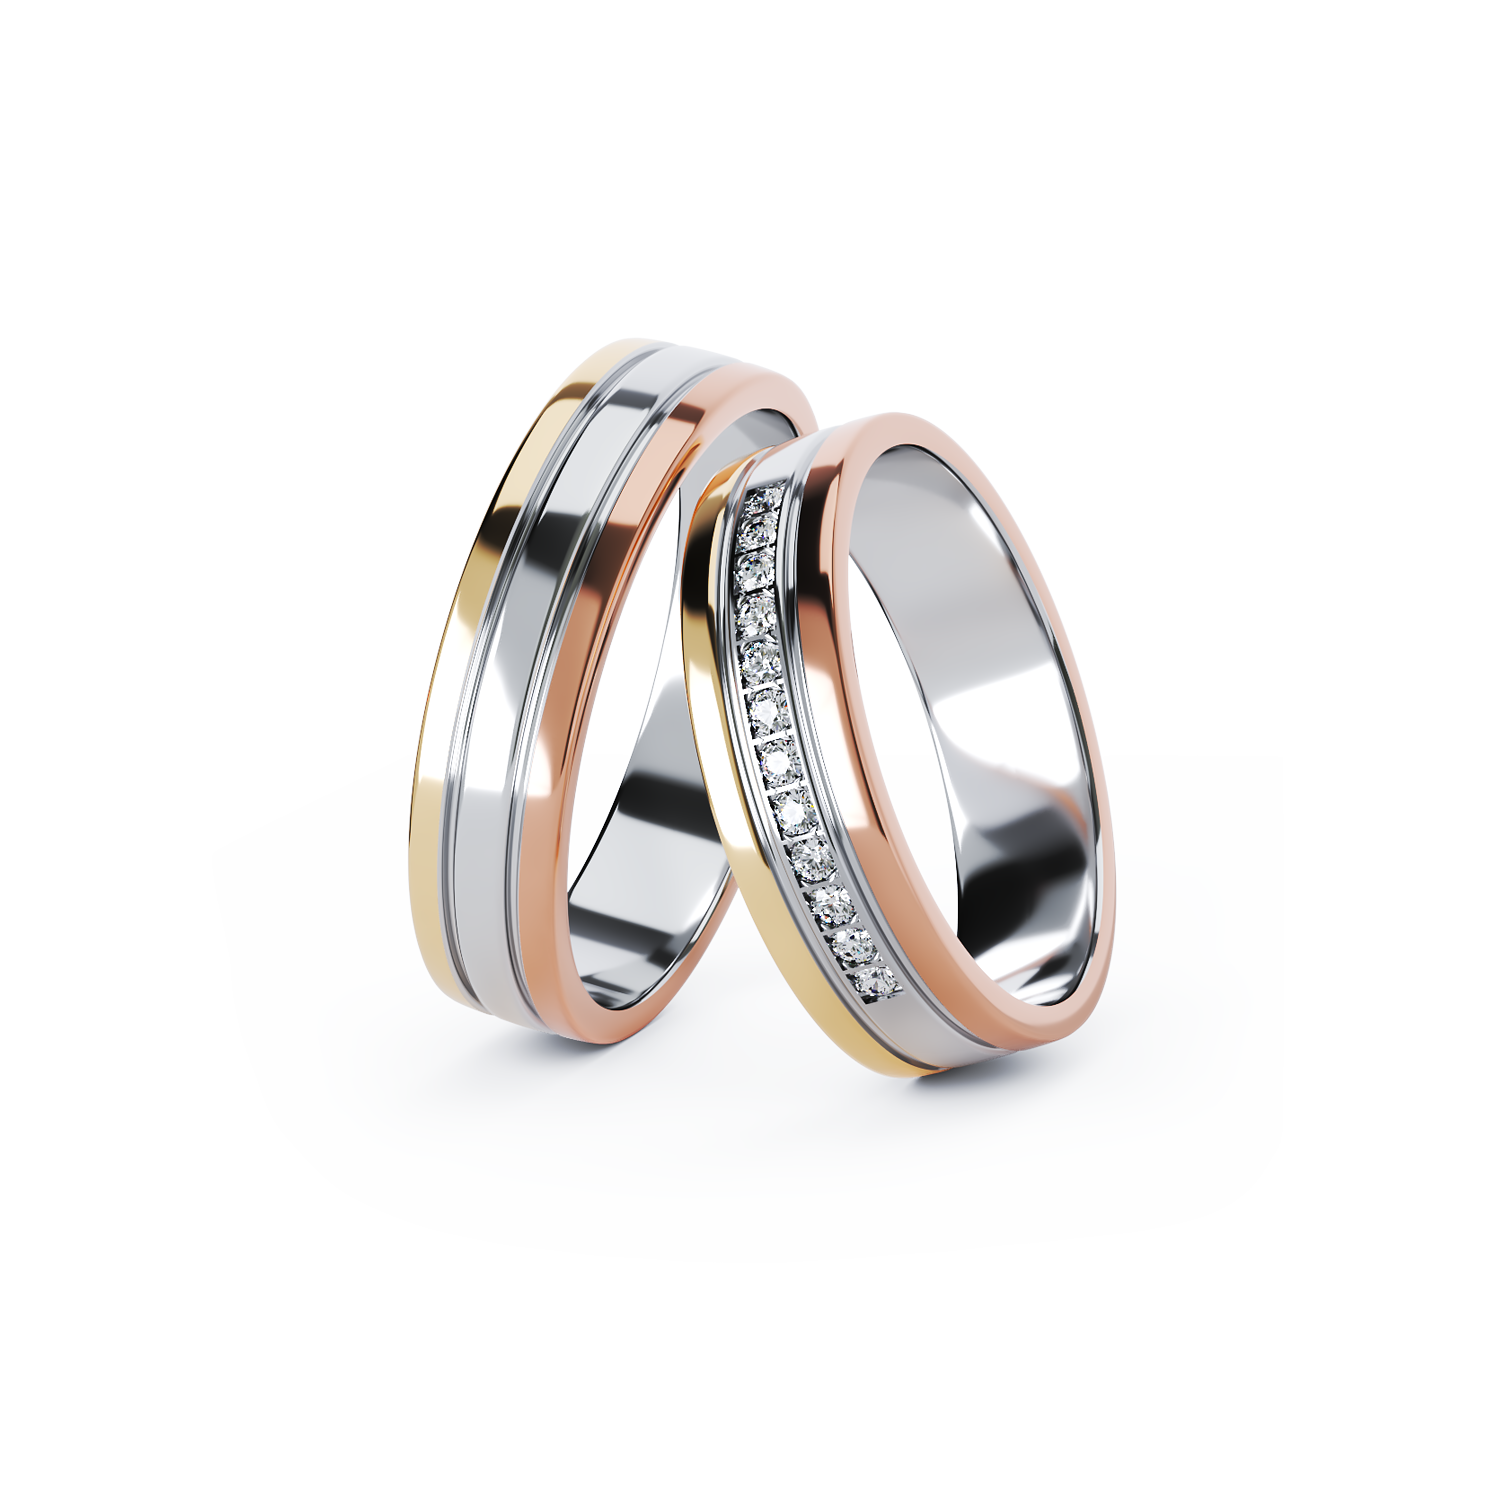 TEI-C381 gold wedding rings